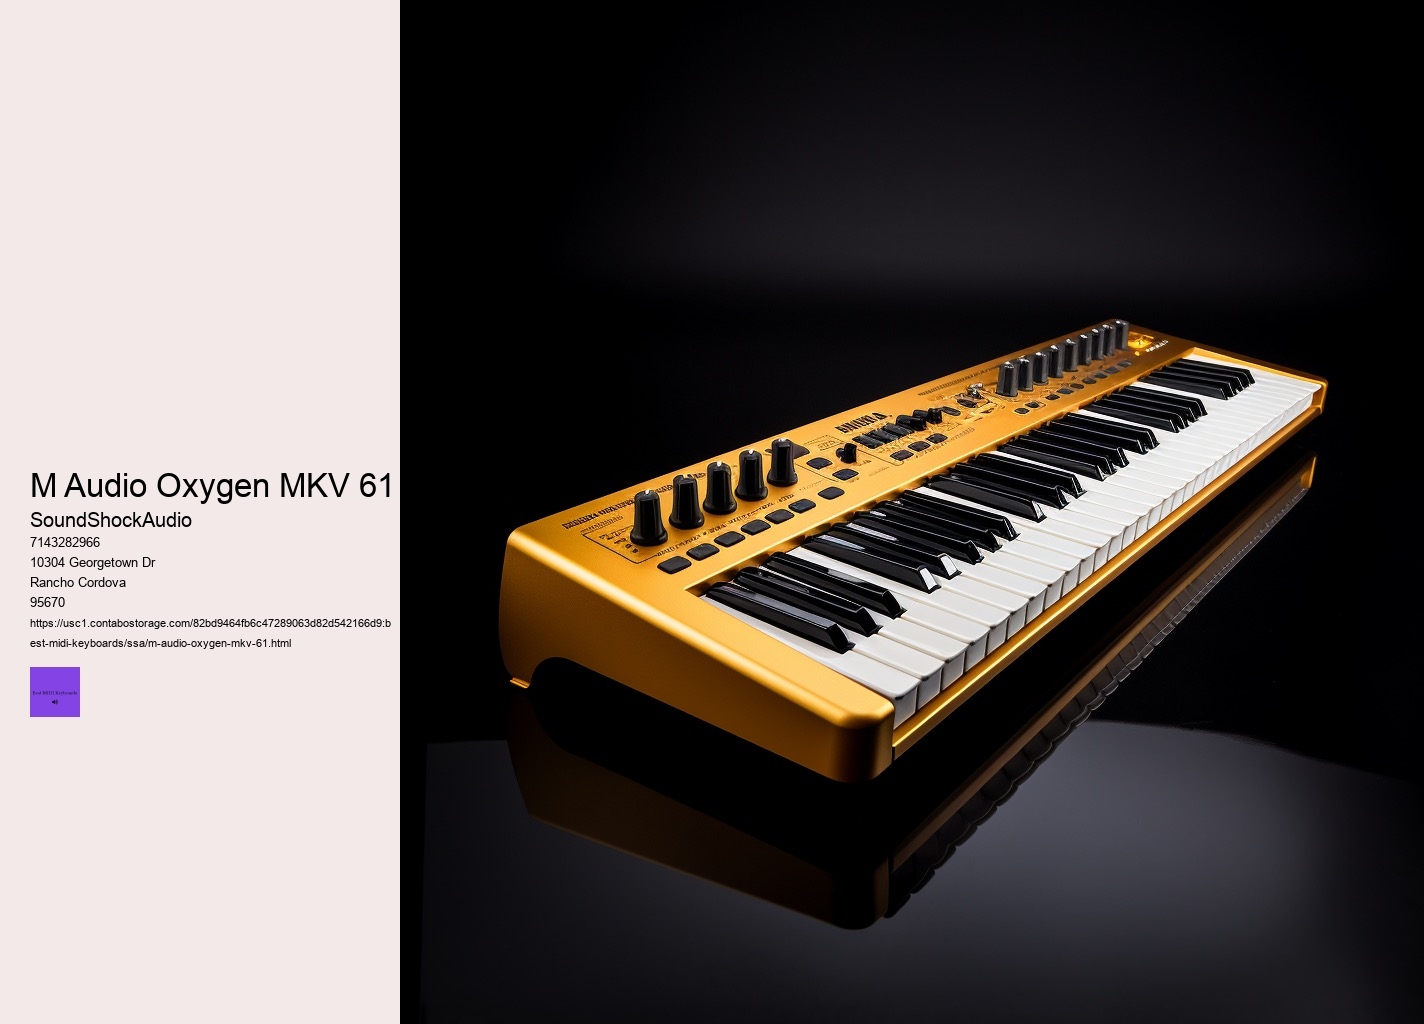 What MIDI keyboard does deadmau5 use?